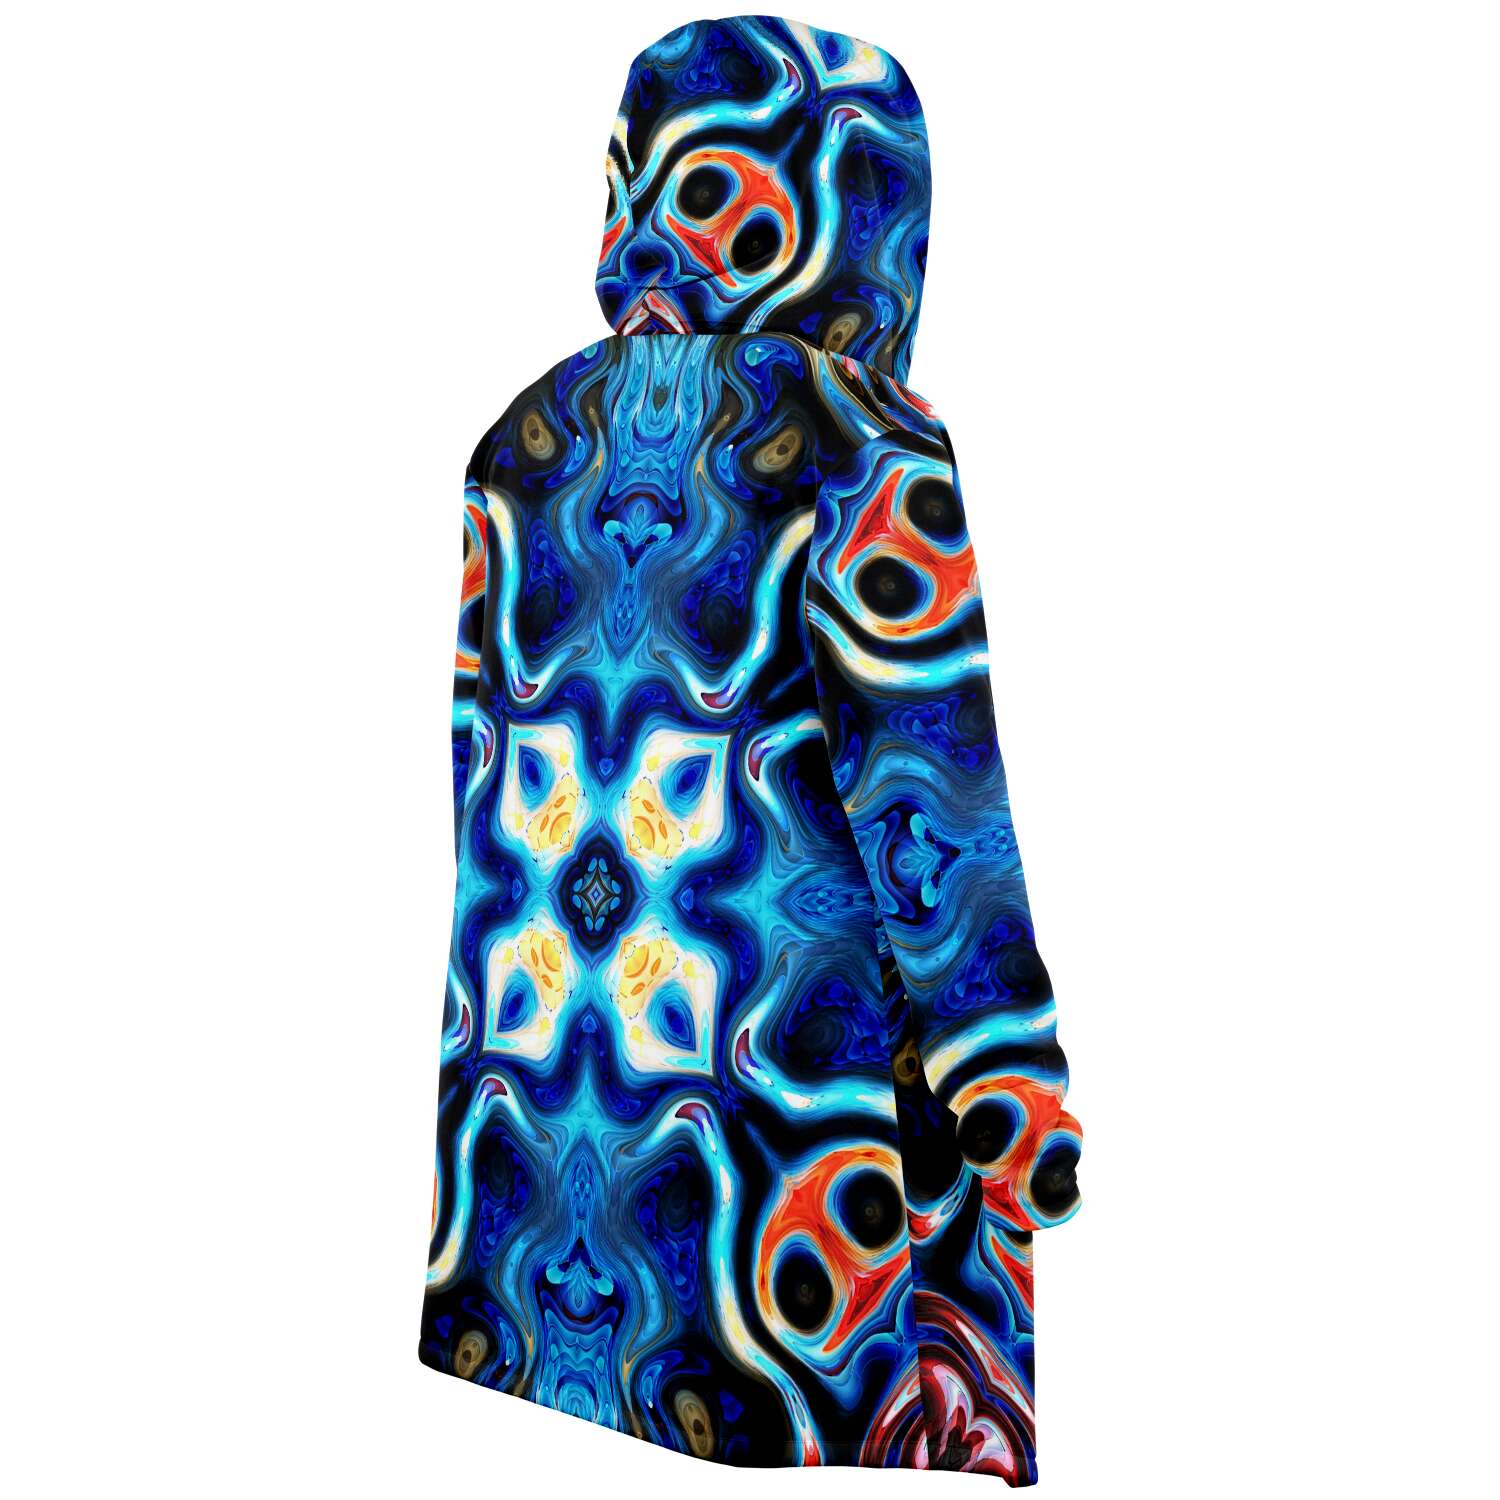 Hydro Daze Fractals Dream Cloak With Hood